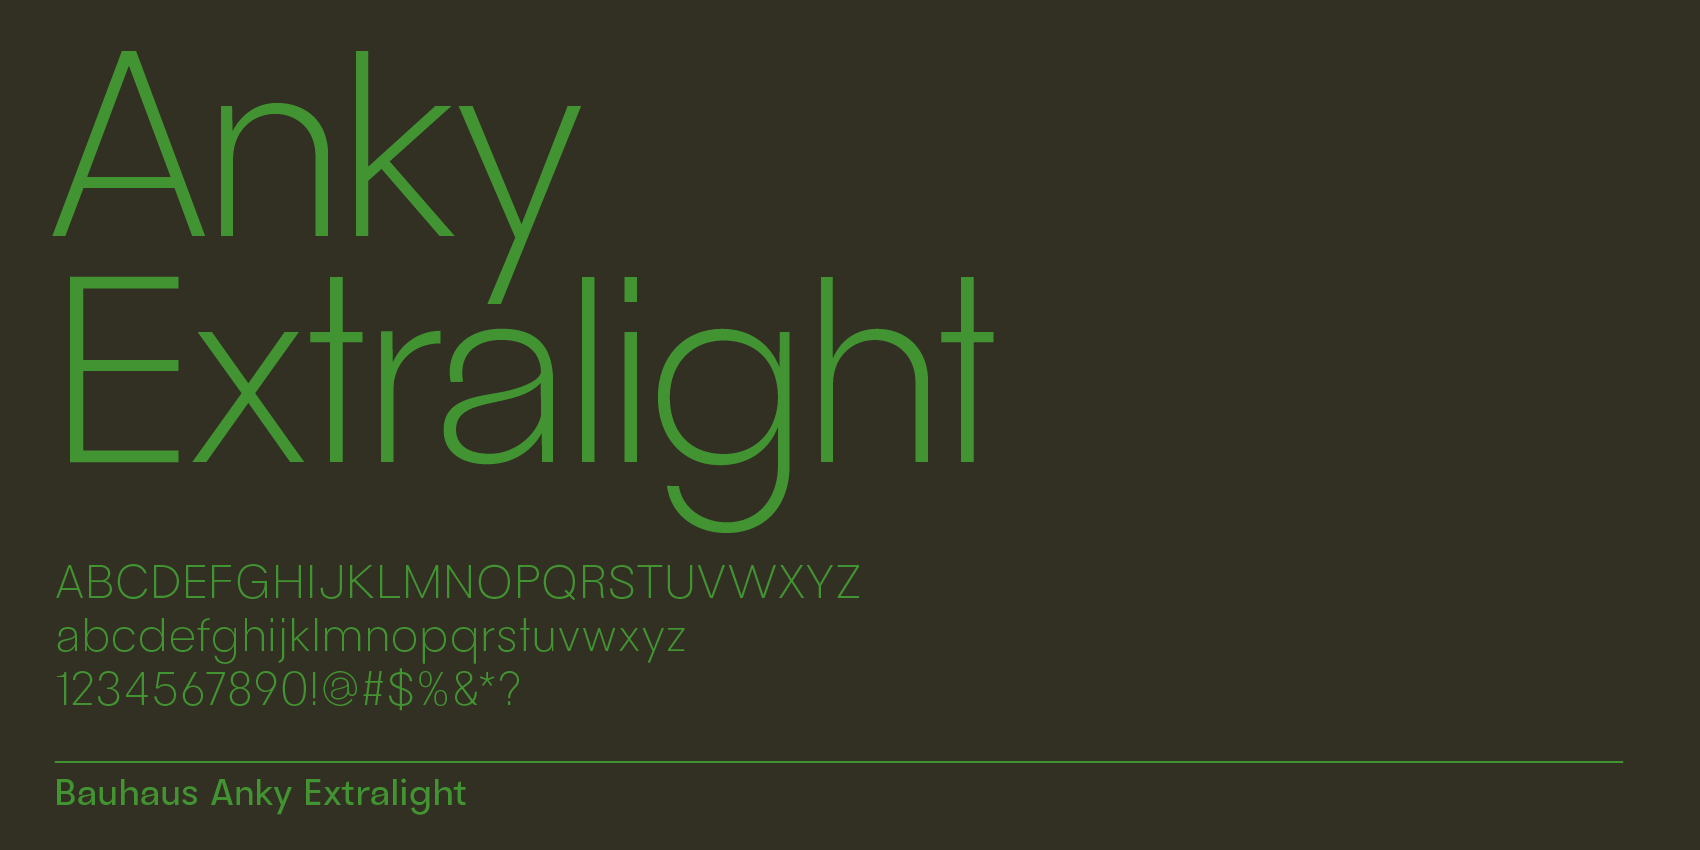 Anky Extralight, modern startup font